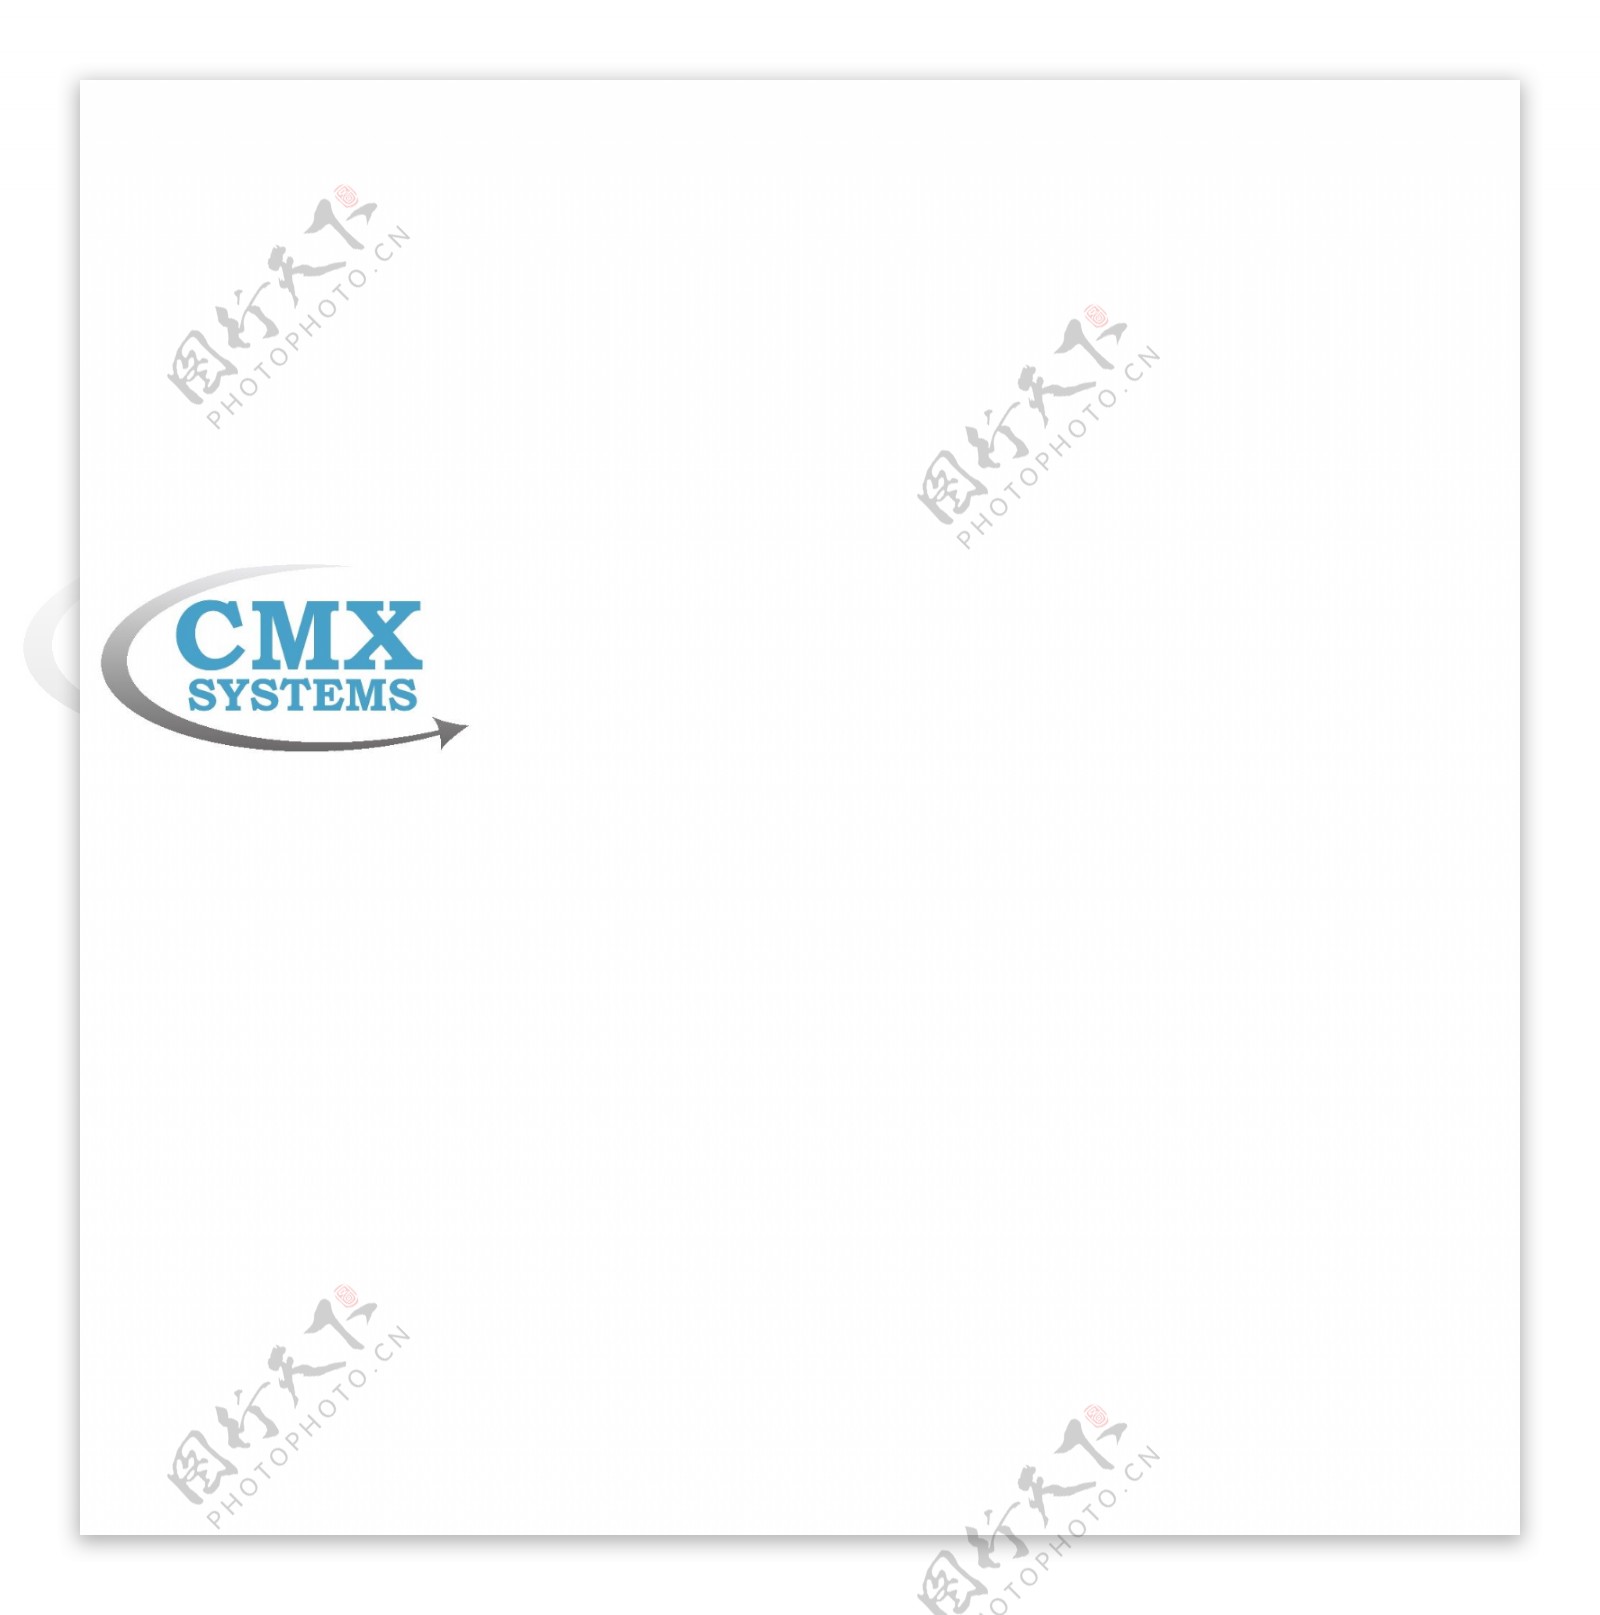 CMXSystemslogo设计欣赏CMXSystems电脑软件标志下载标志设计欣赏